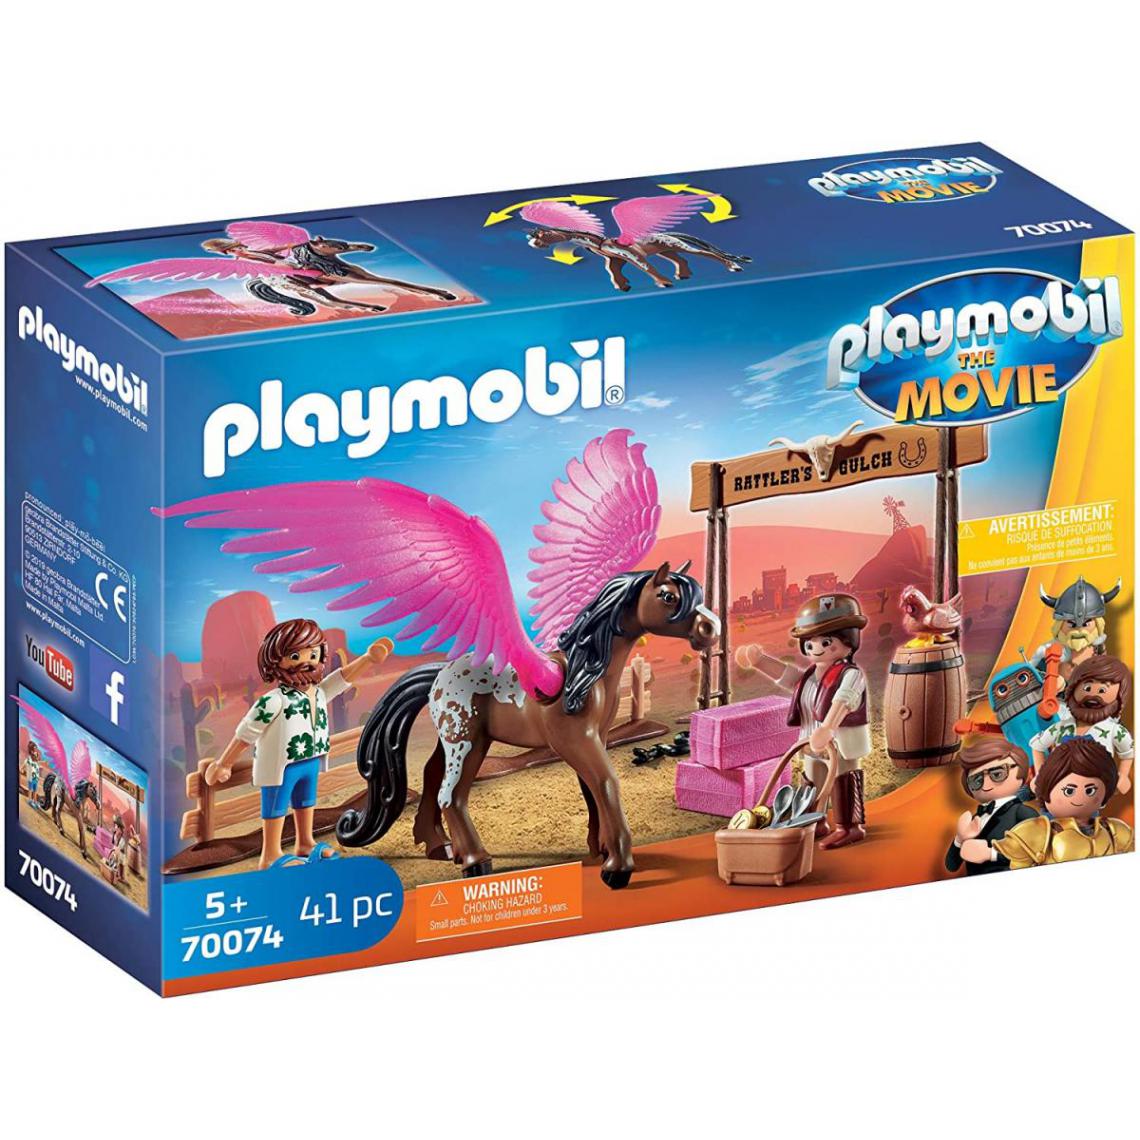 Playmobil - 70074 Playmobil the movie Marla et Del avec cheval ailé - Playmobil